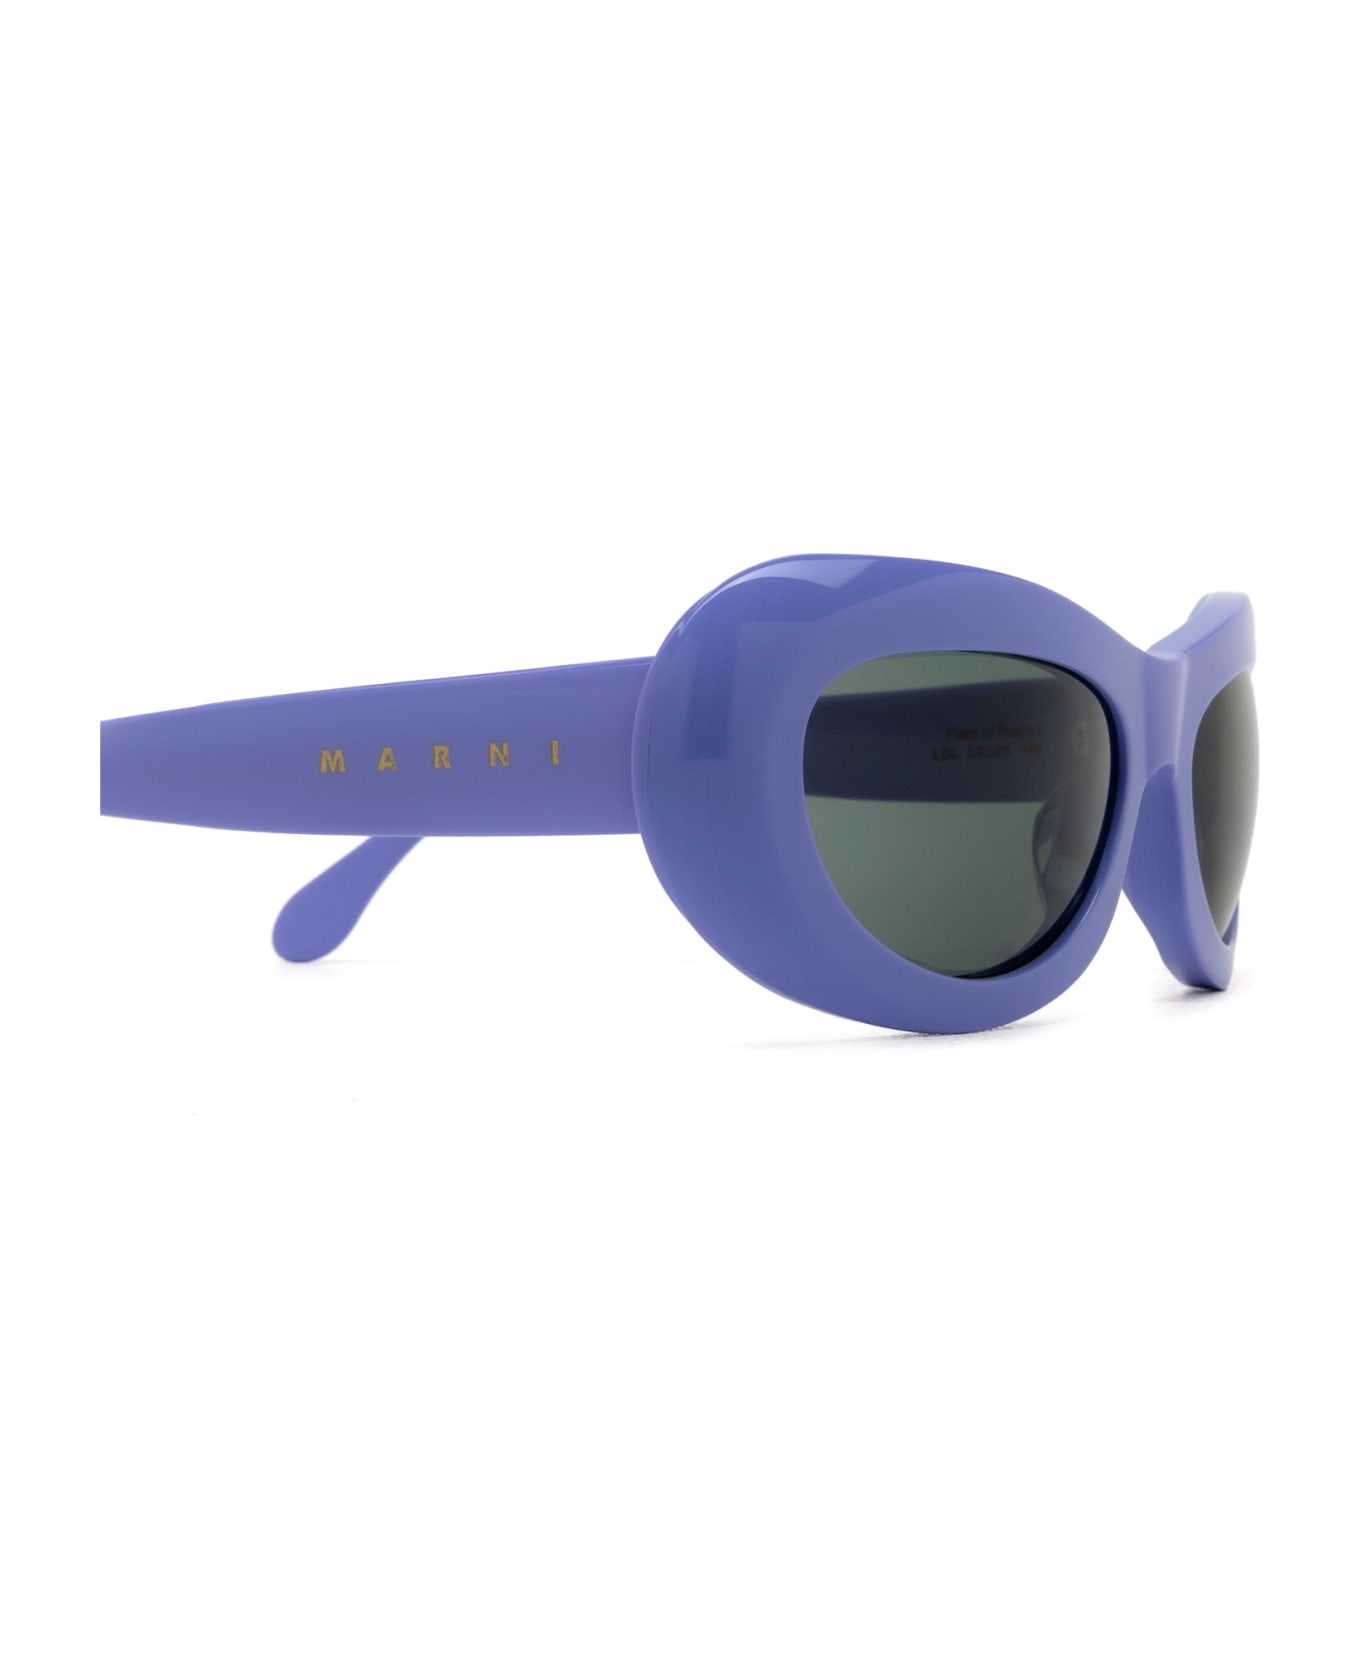 Marni Eyewear Field Of Rushes Lilac Sunglasses - Lilac